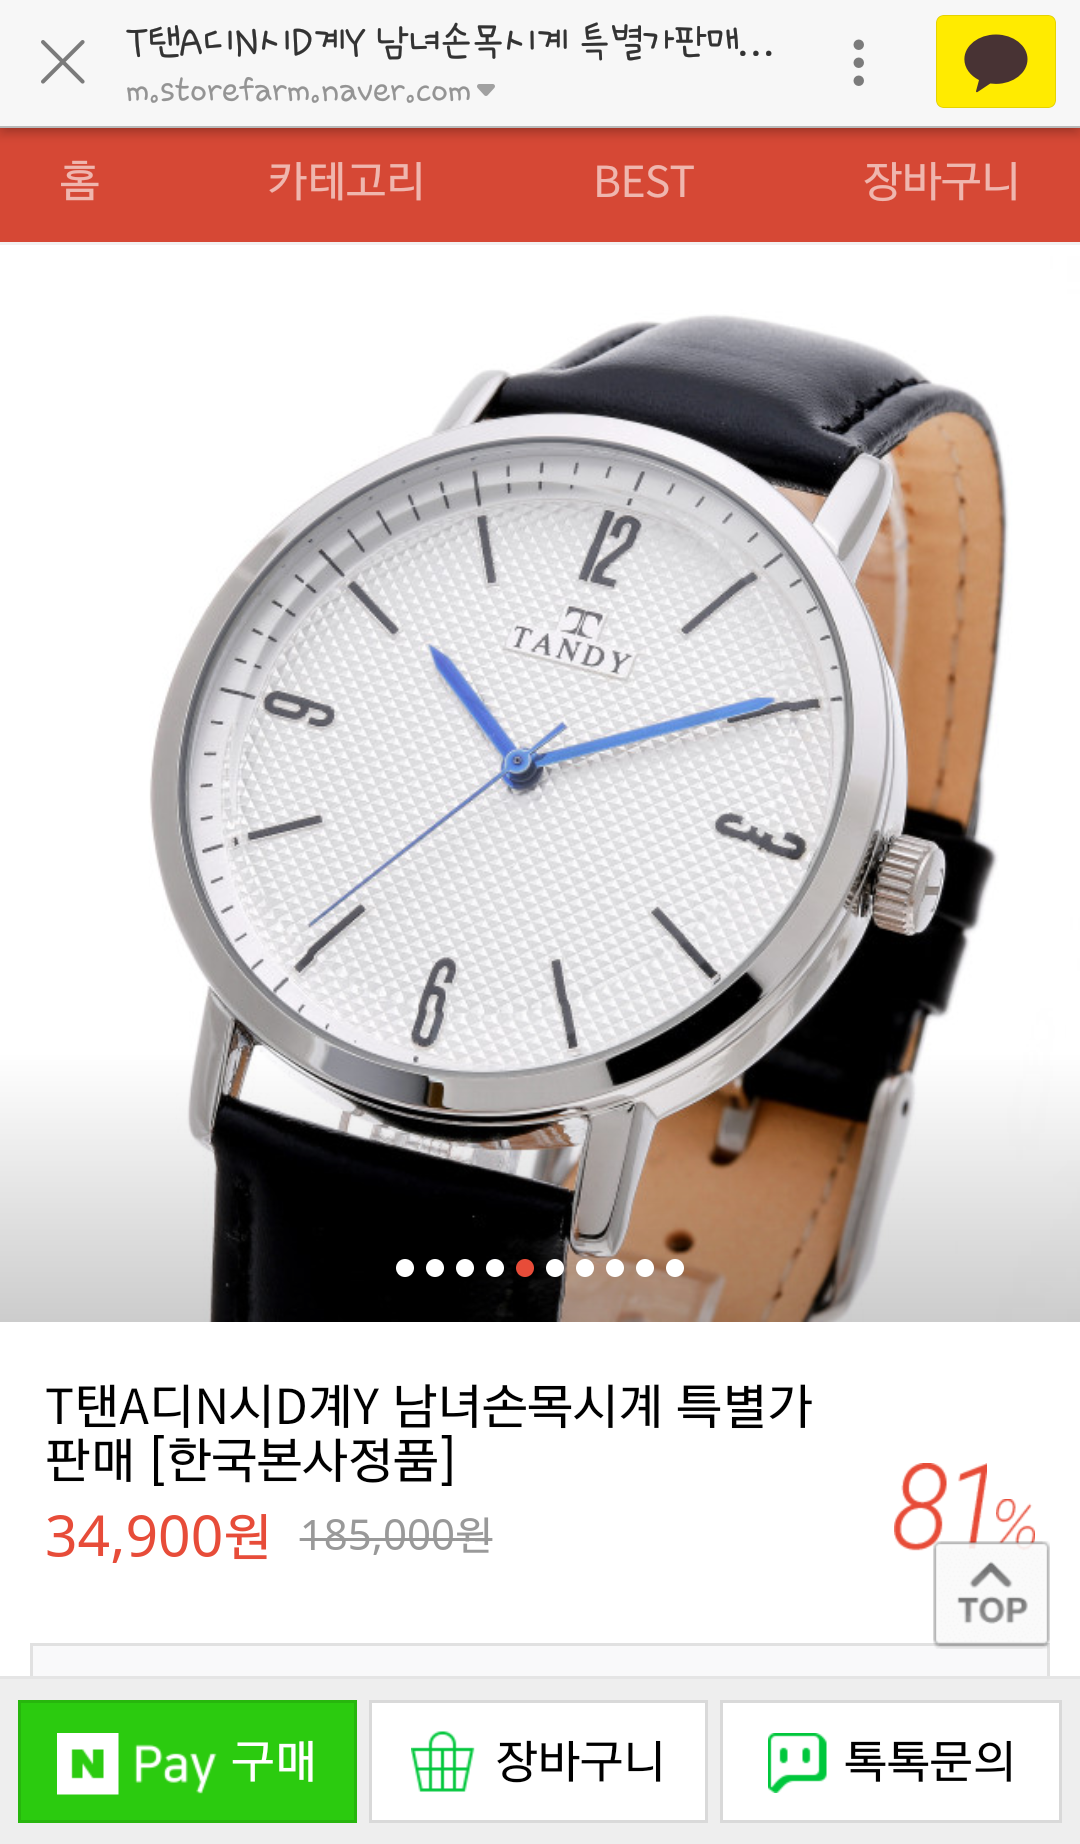 Screenshot_2017-08-23-07-44-40-1.png : [스토어팜]손목시계 한정수량 할인판매